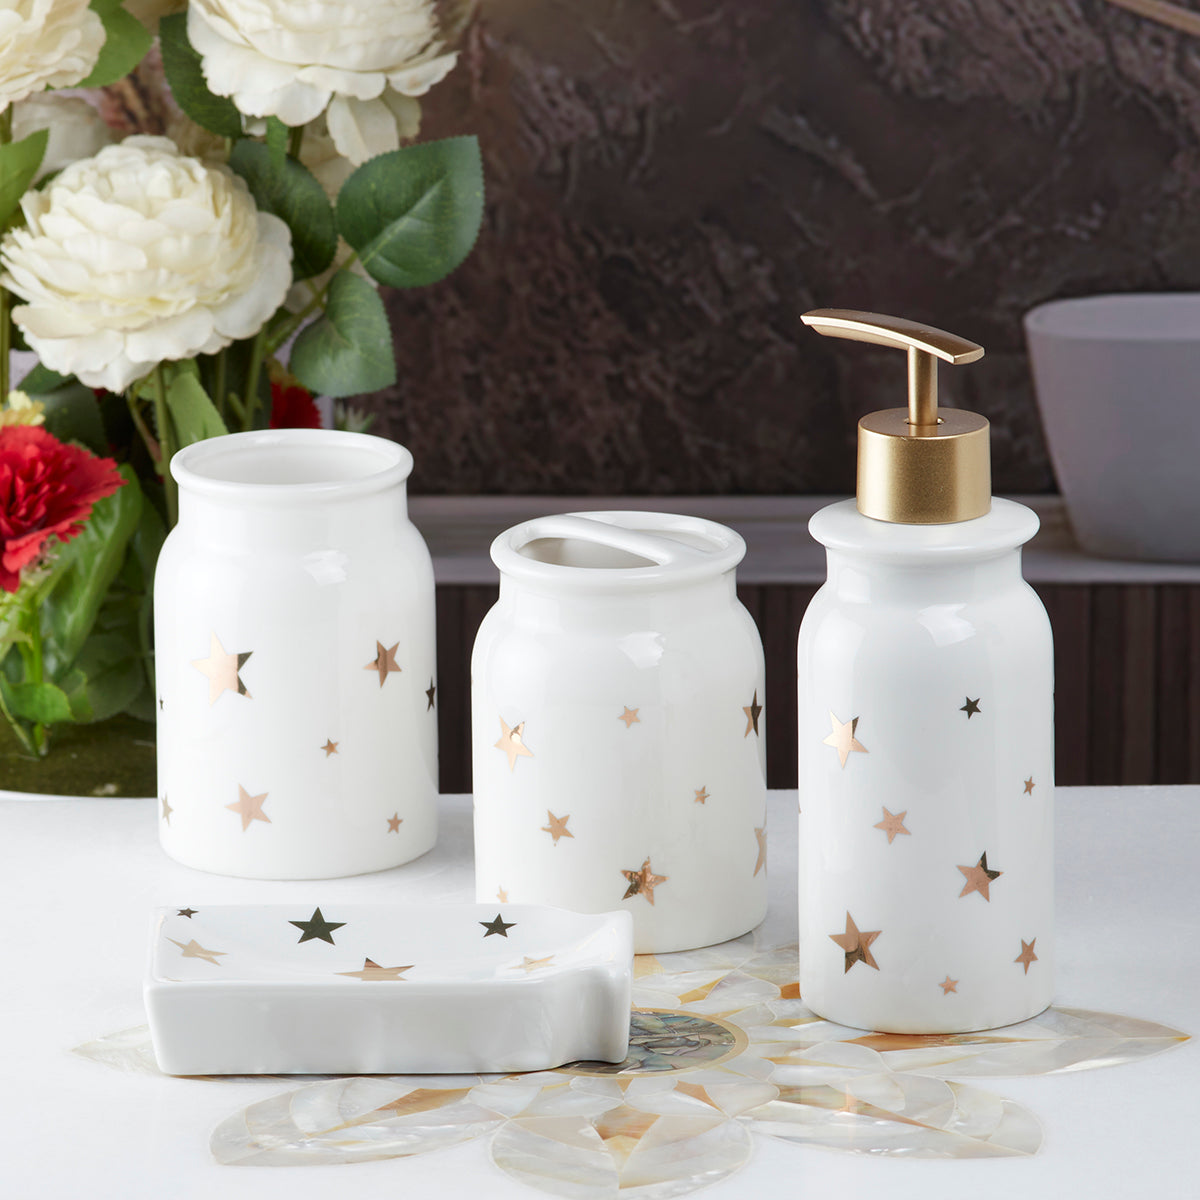 Ceramic Bathroom Accessories Set of 4 Bath Set with Soap Dispenser (10112)